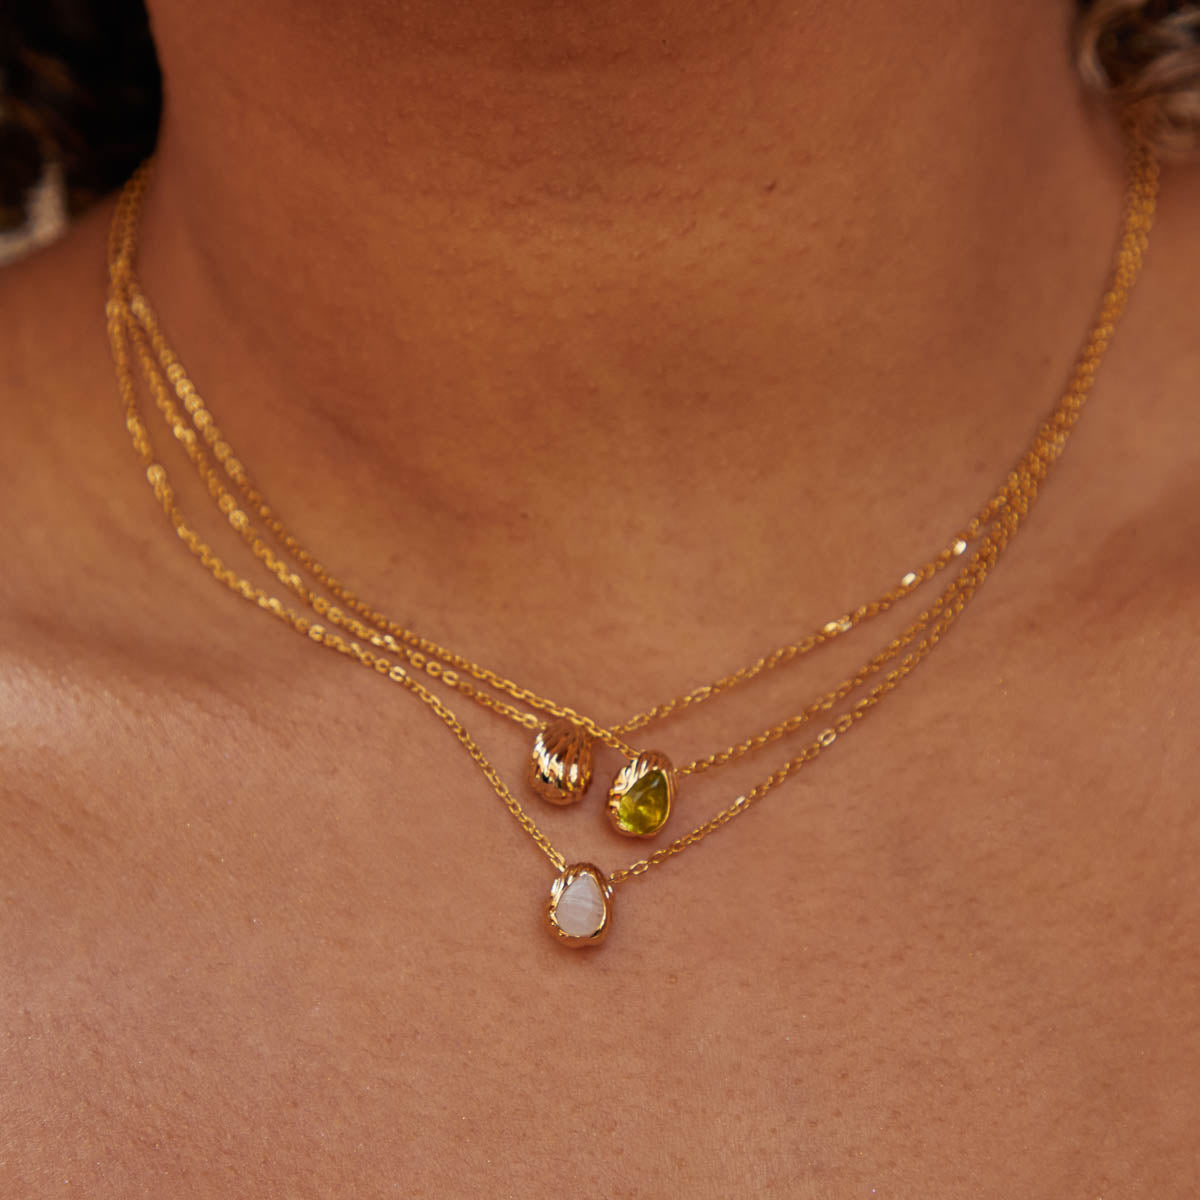 Olivine Pendant Necklace in Gold